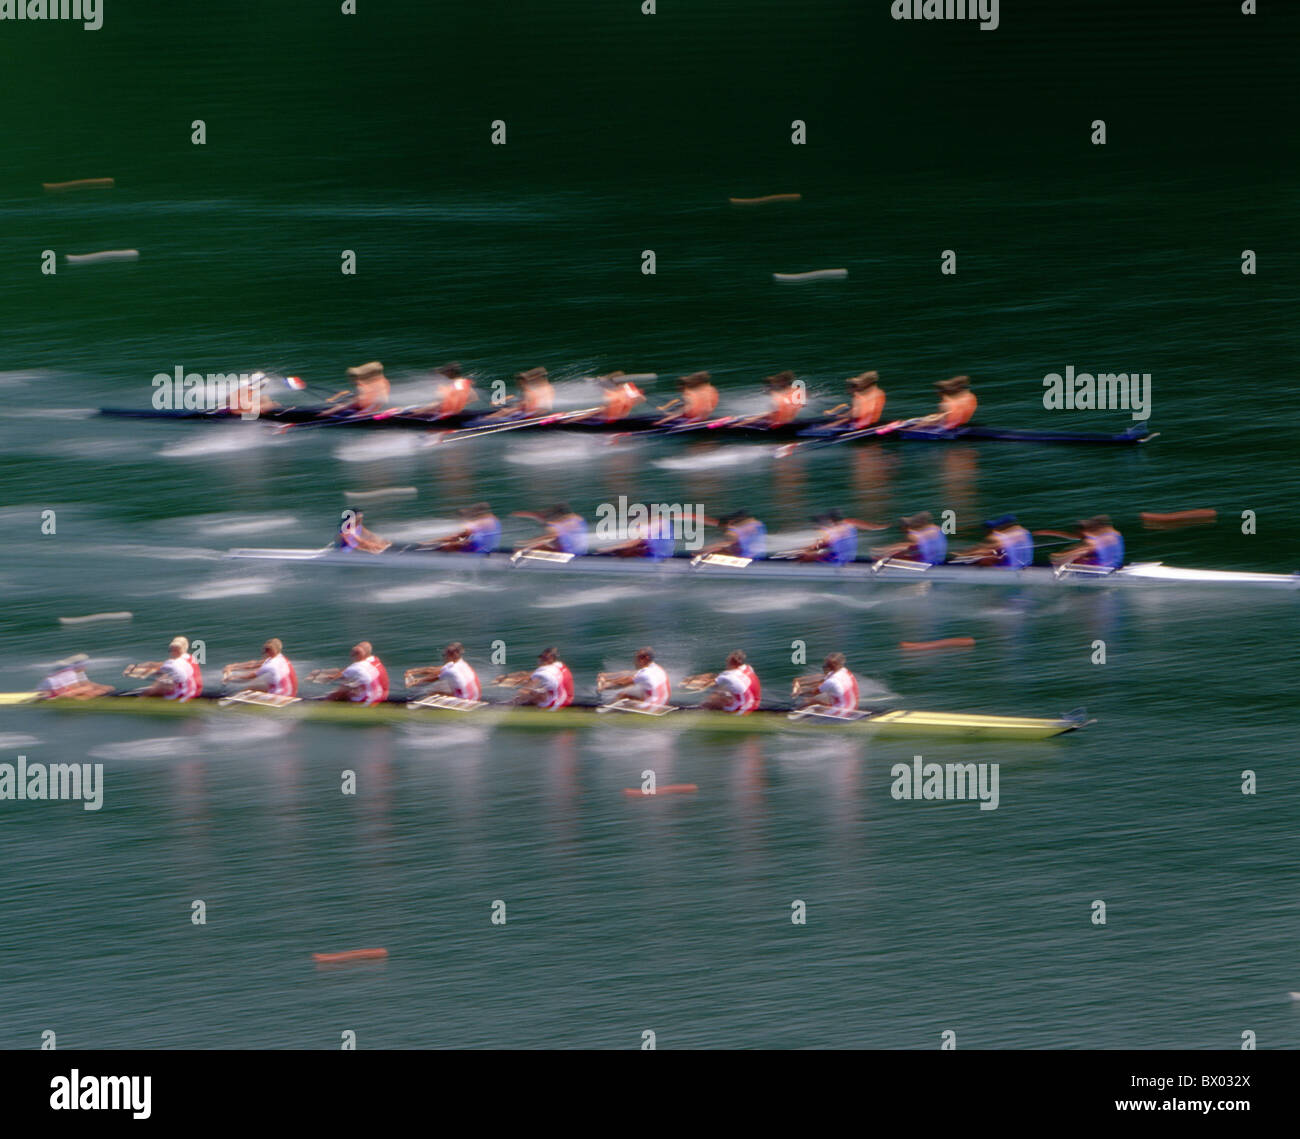 rowing sport eight juryman impression Lucerne no model release regatta oars blurs world championship Stock Photo